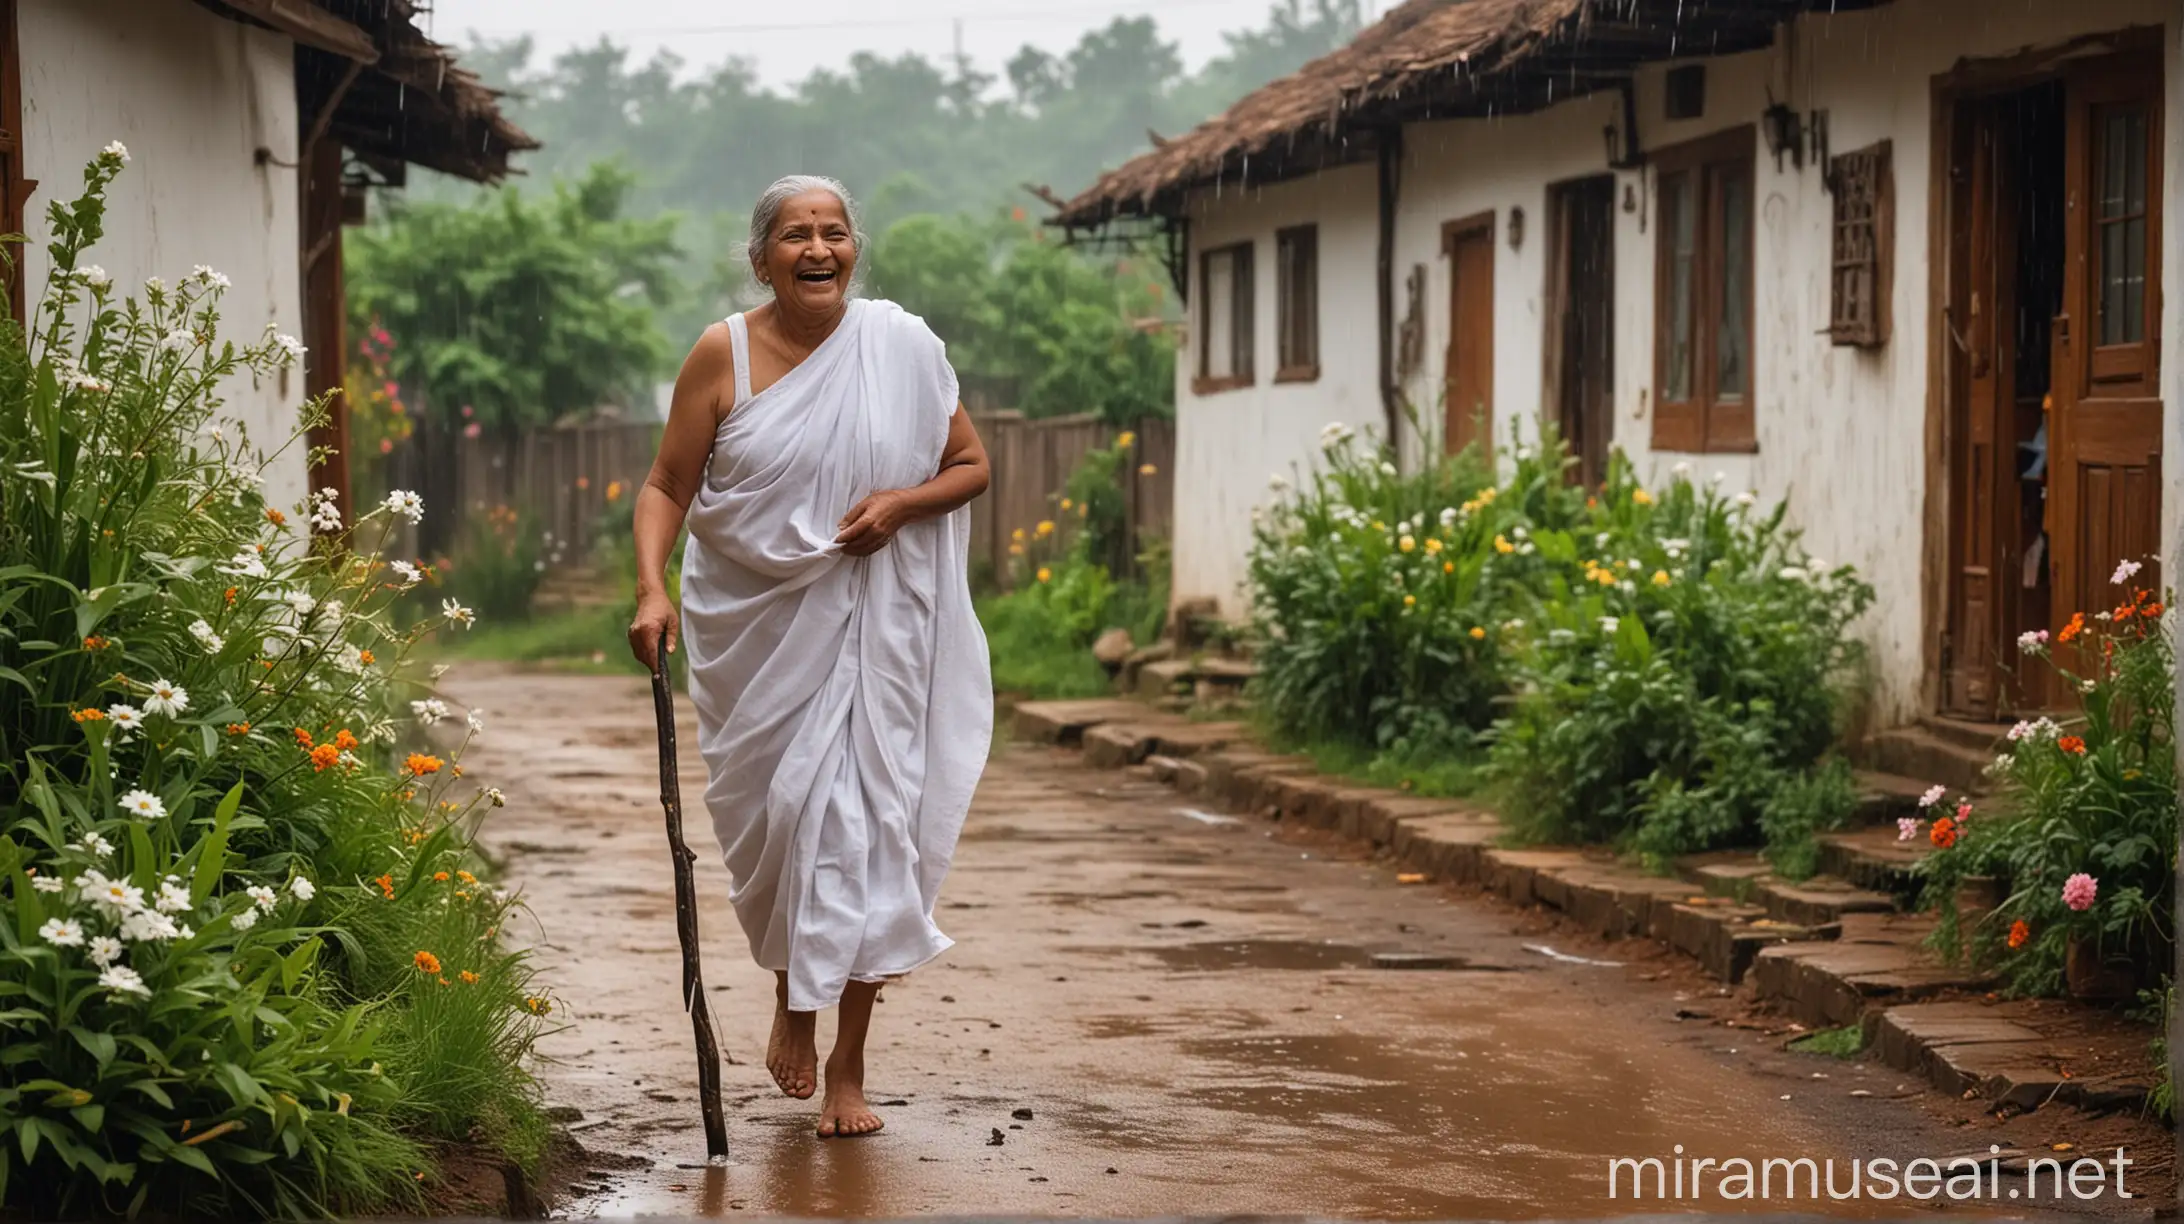 Elderly Indian Woman Walking with Joy in Rainy Village Evening